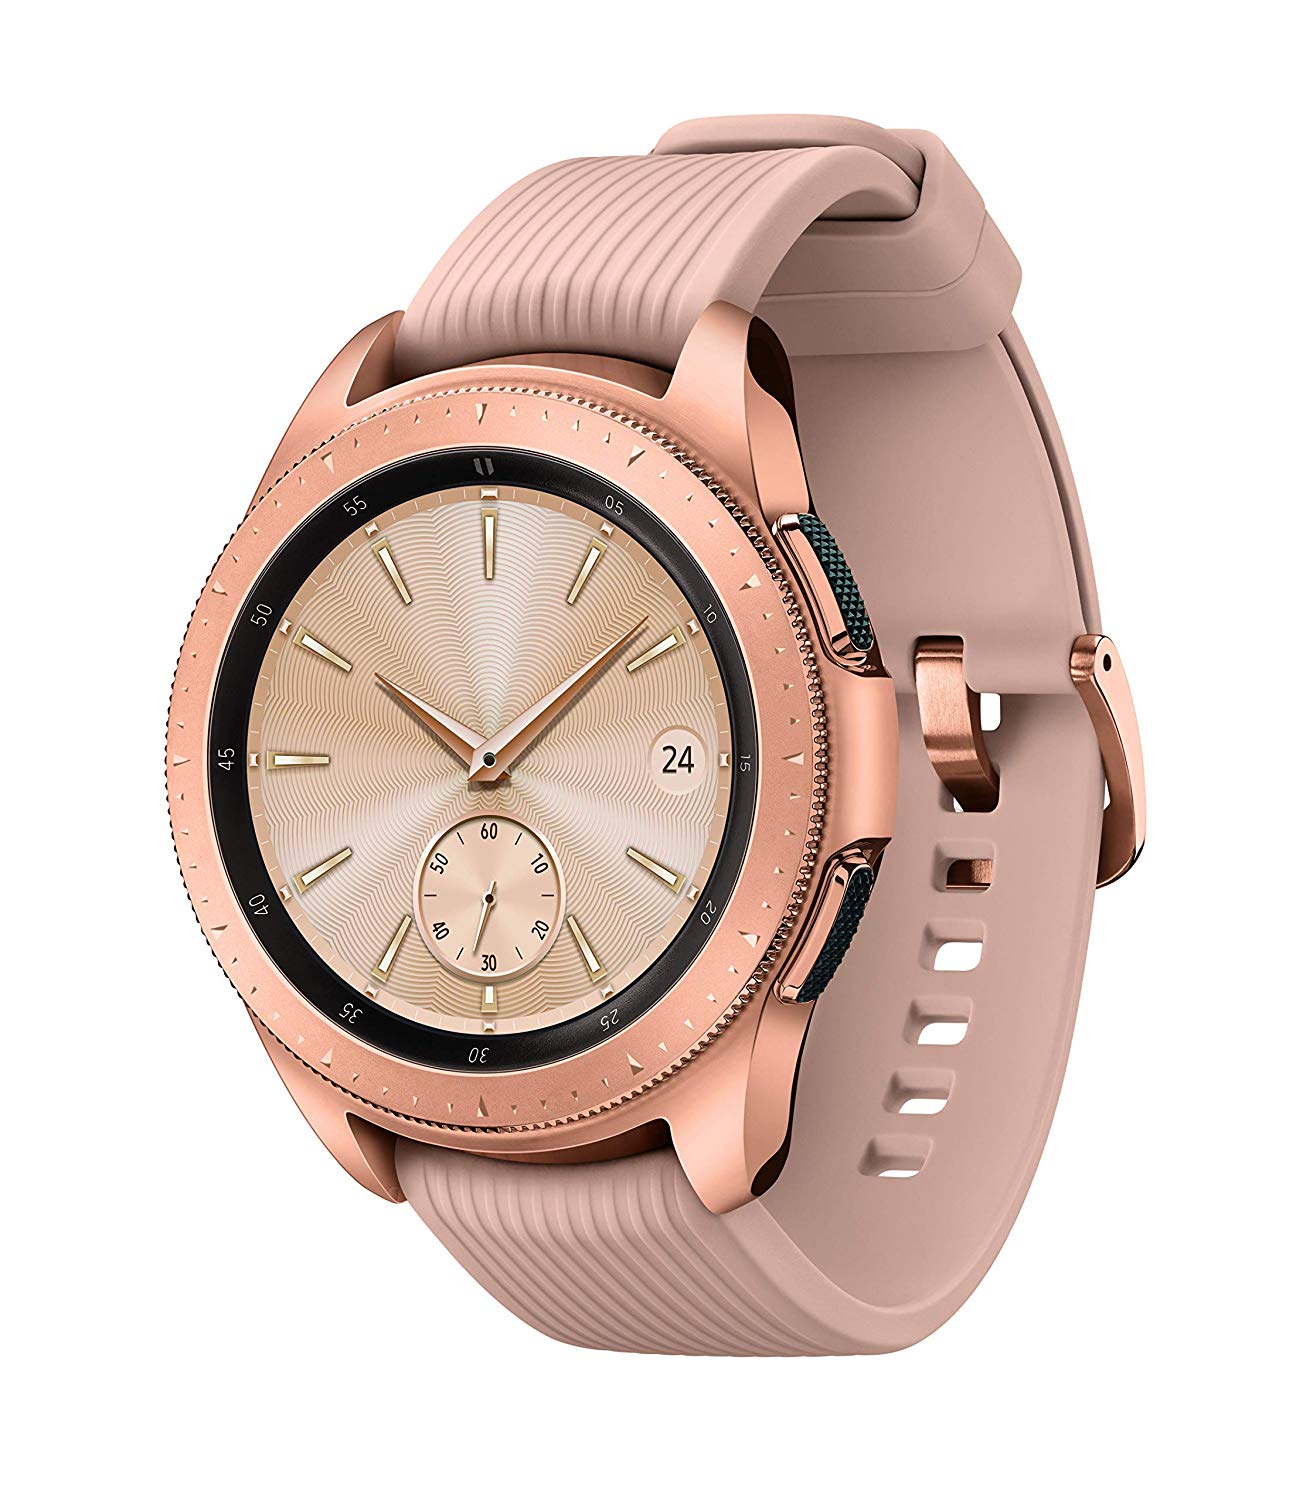 Ebay - *REFURB* Samsung Galaxy Watch R810U Smartwatch 42mm Stainless Steel GPS Only - Very Good $37.99